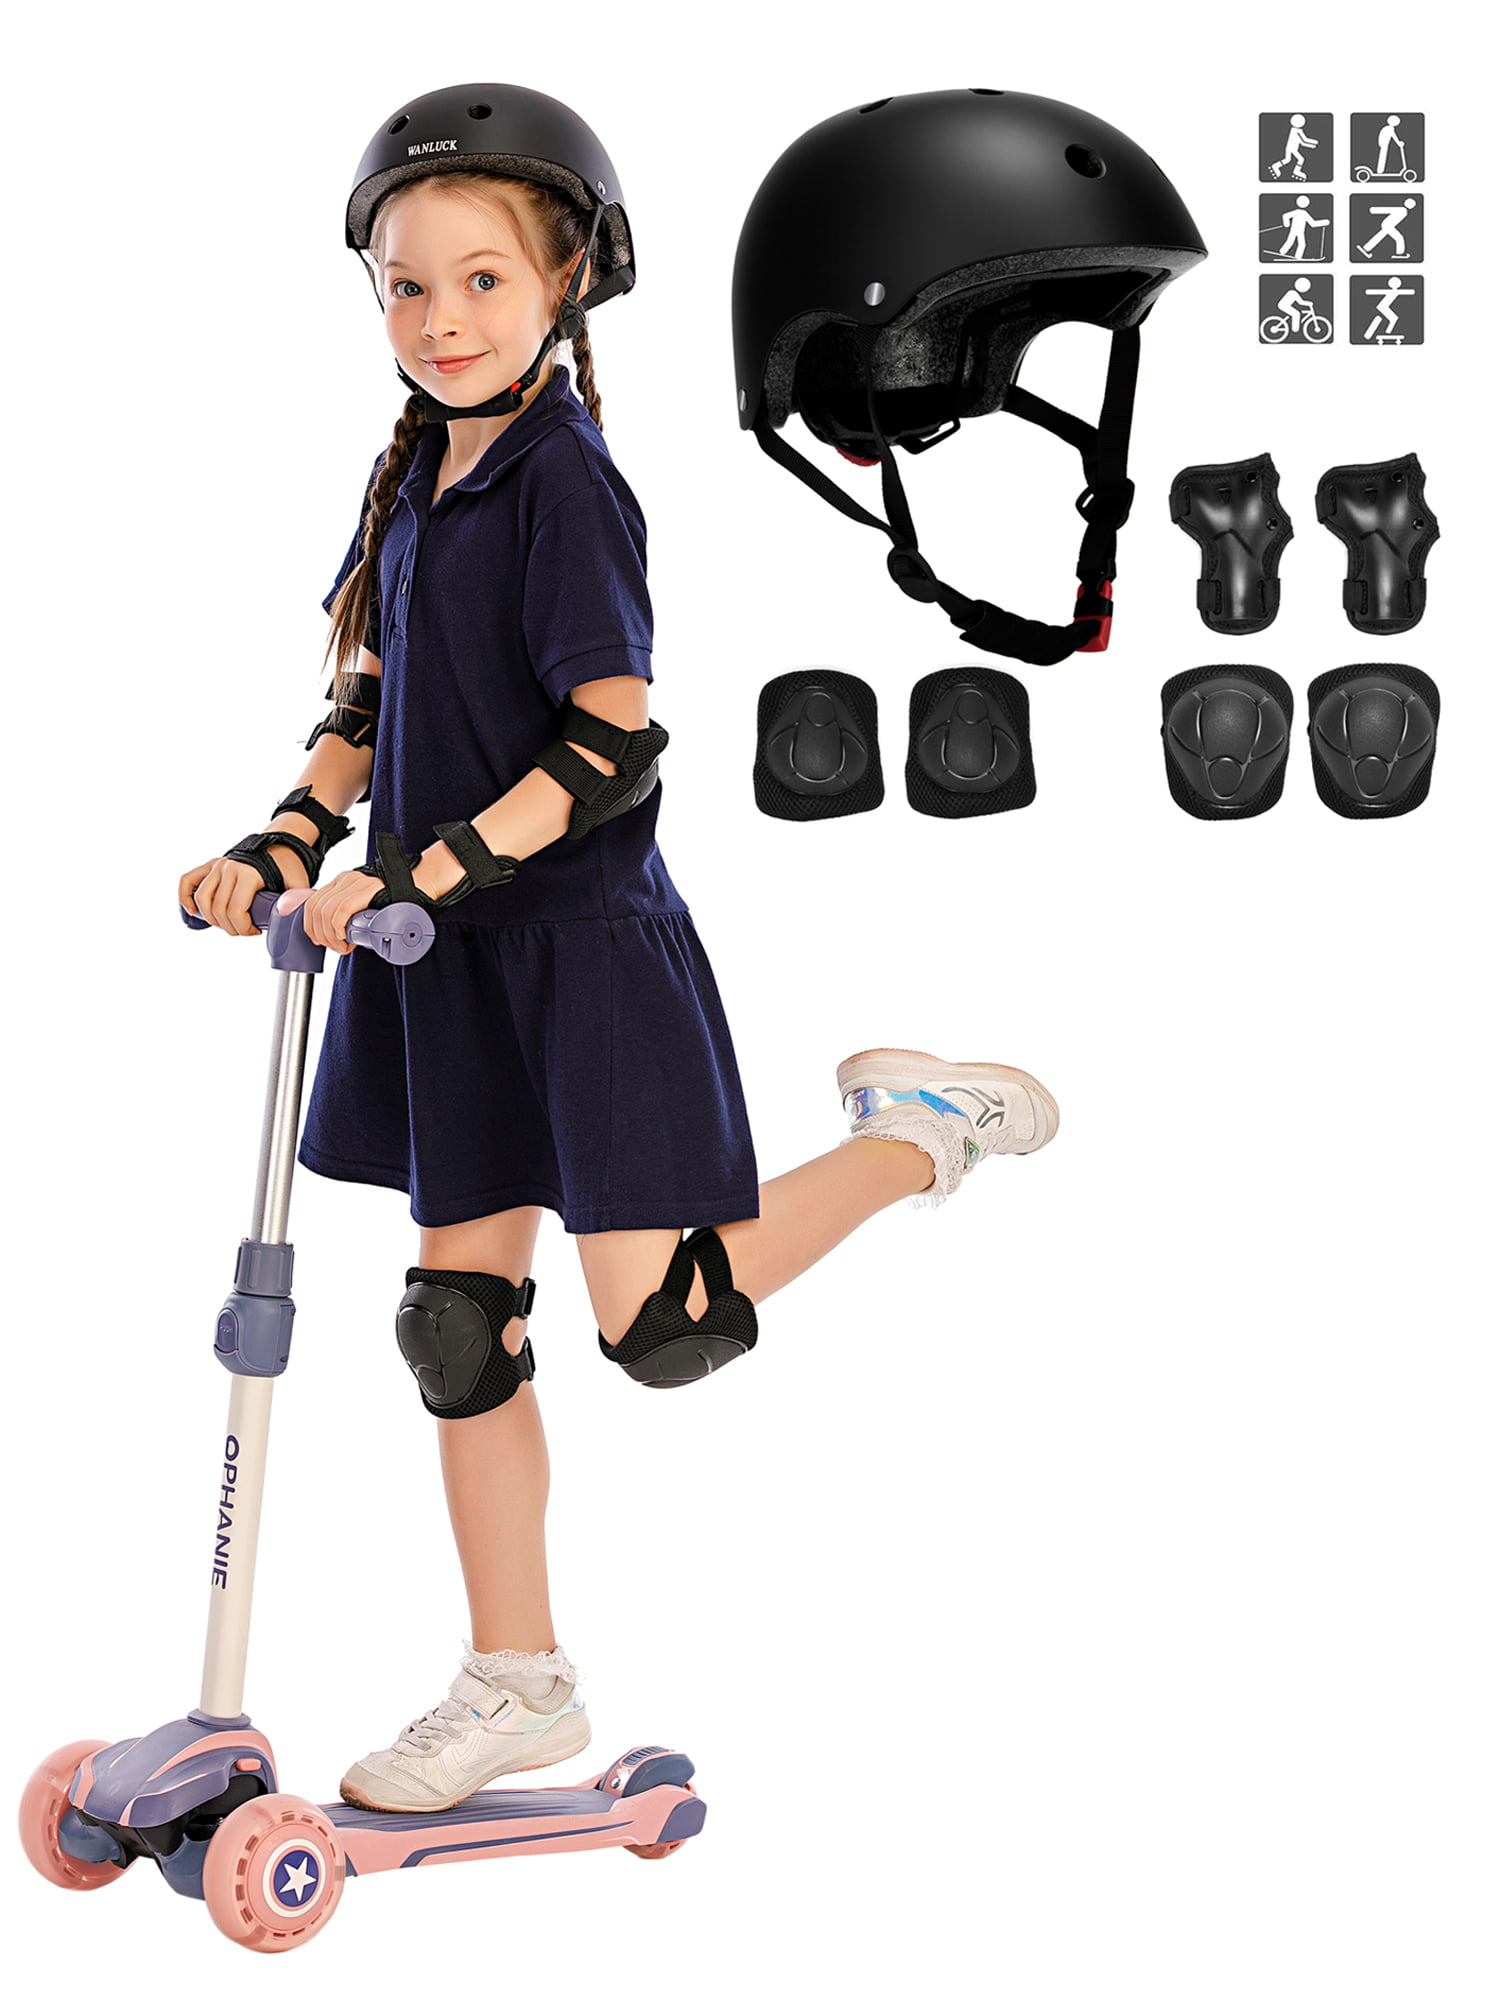 7Set Boys Girls Kids Safety Helmet/&Knee/&Elbow/&Wrist Pad For Cycling Skate Bike